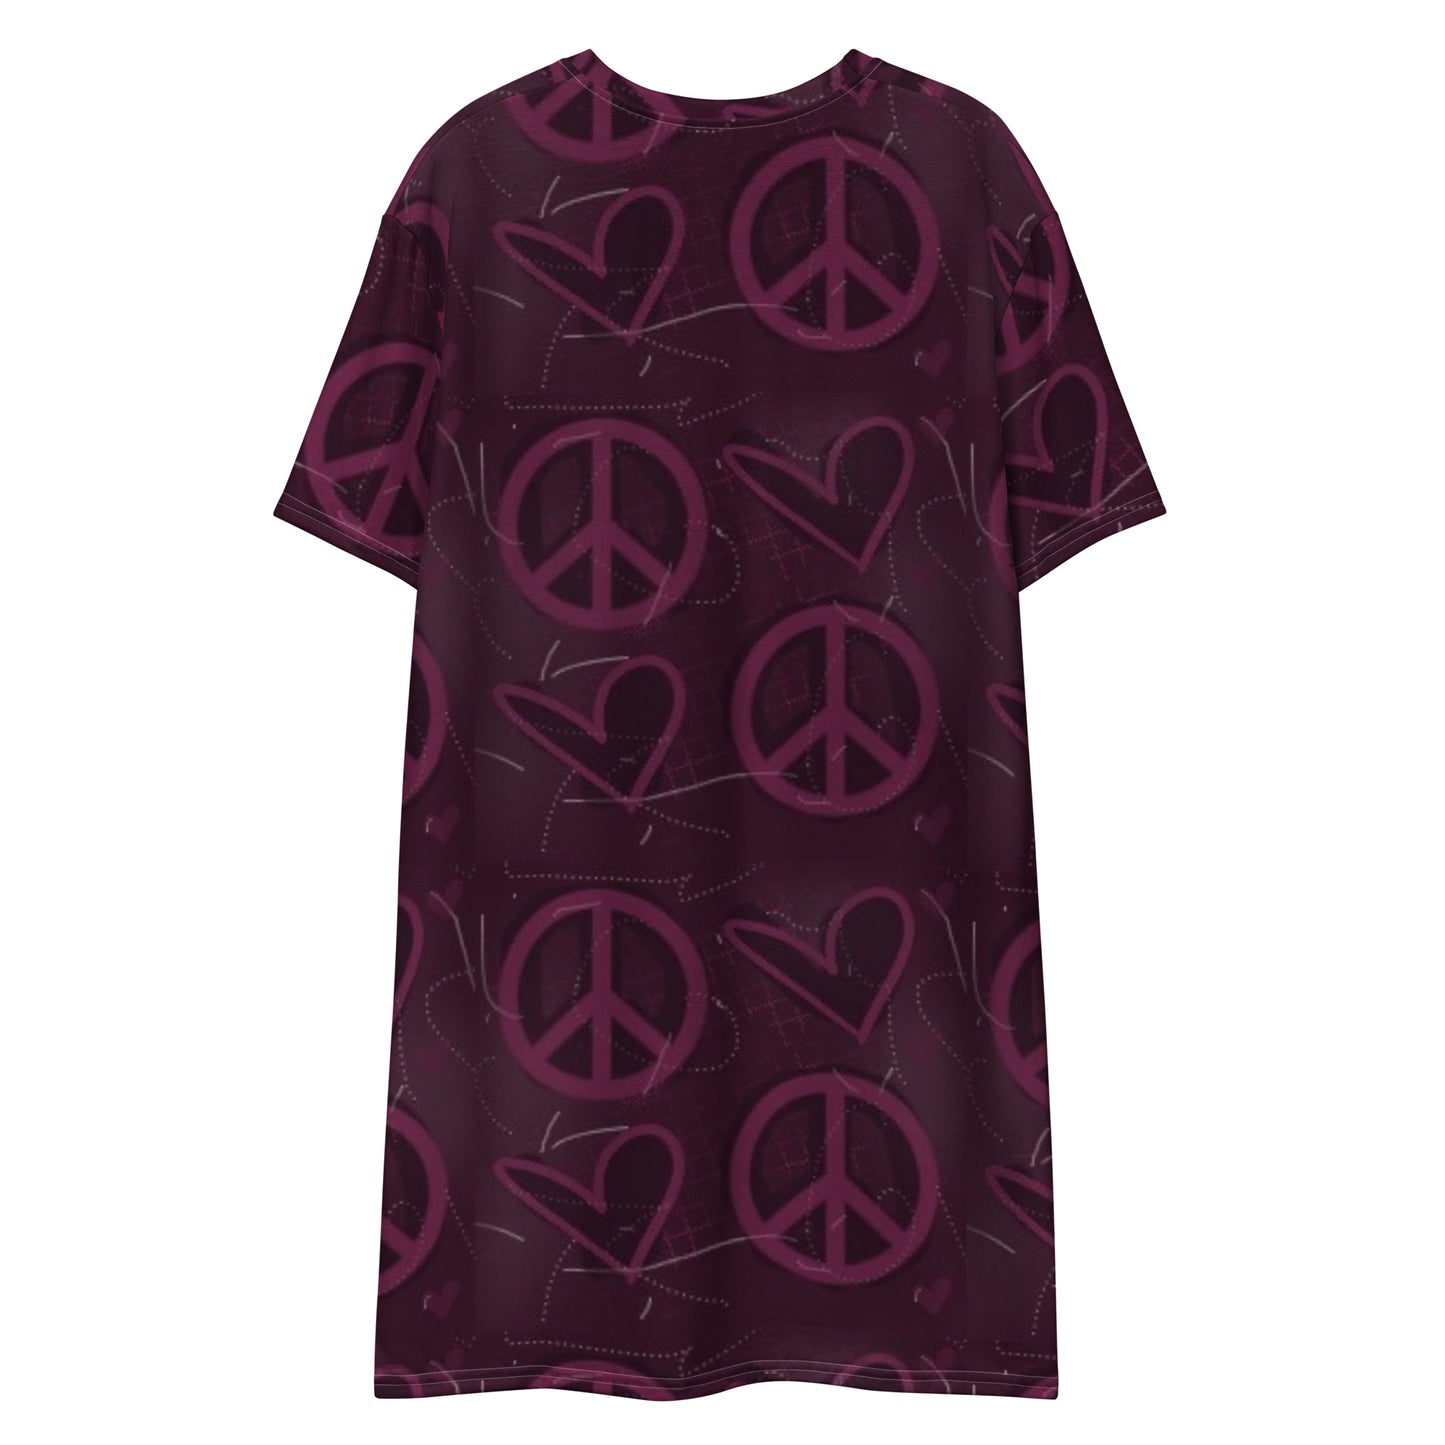 PEACE&LOVE T-shirt dress